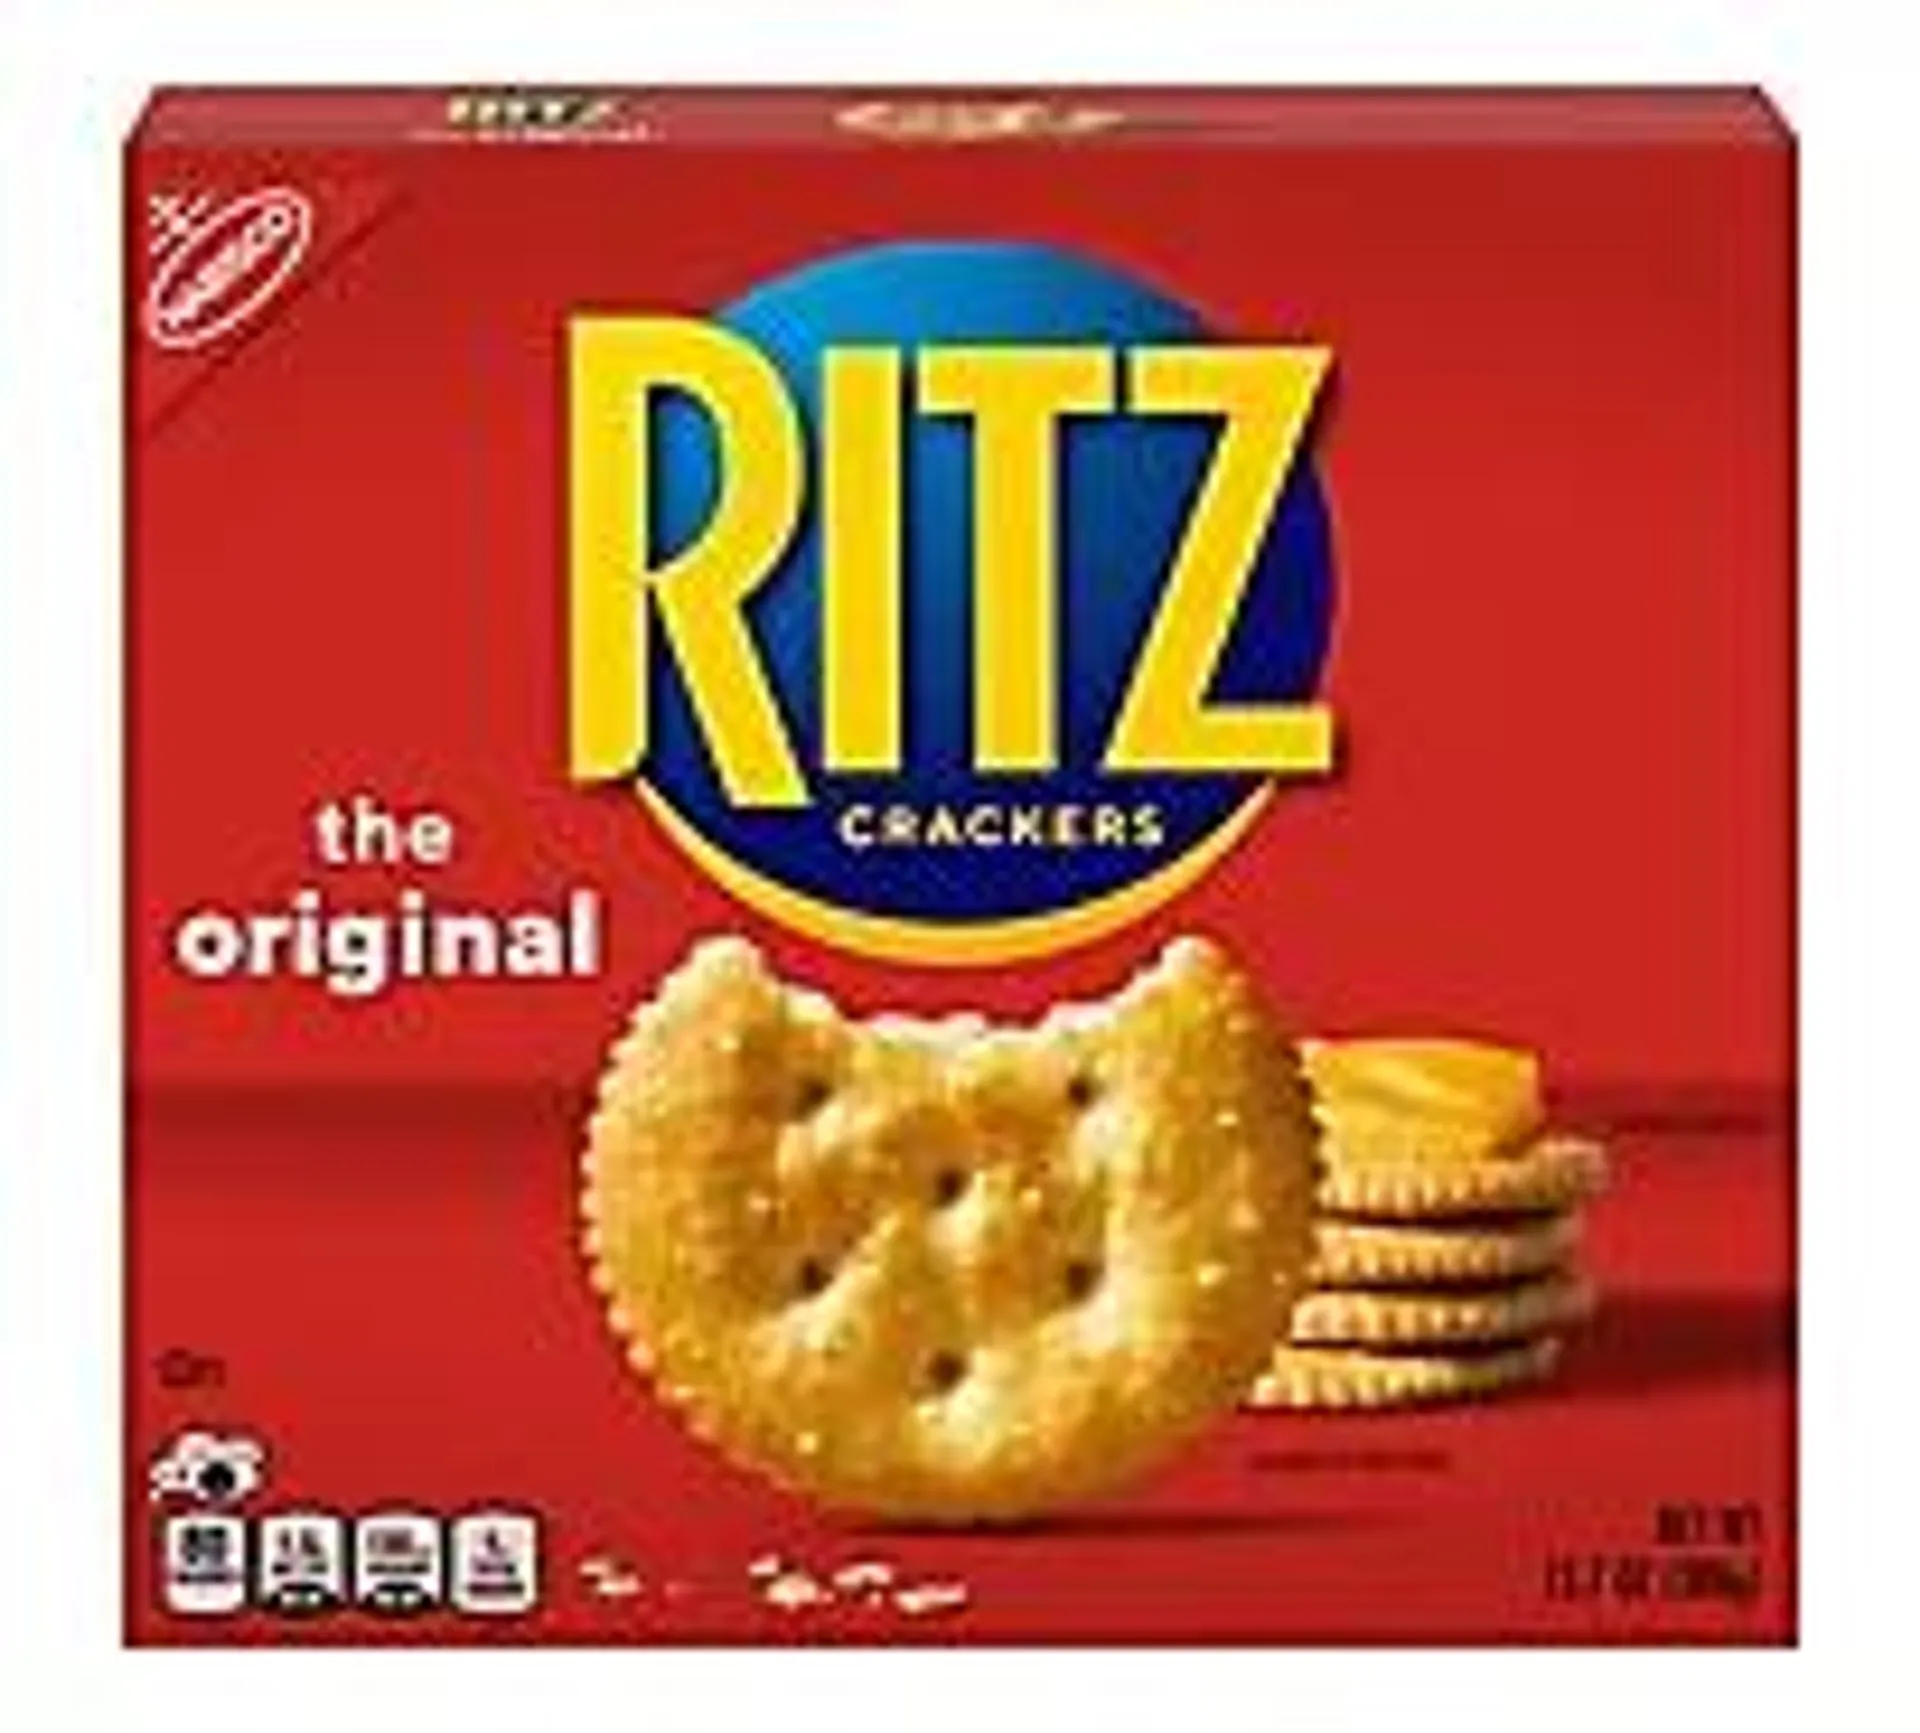 RITZ Crackers Original - 13.7 Oz